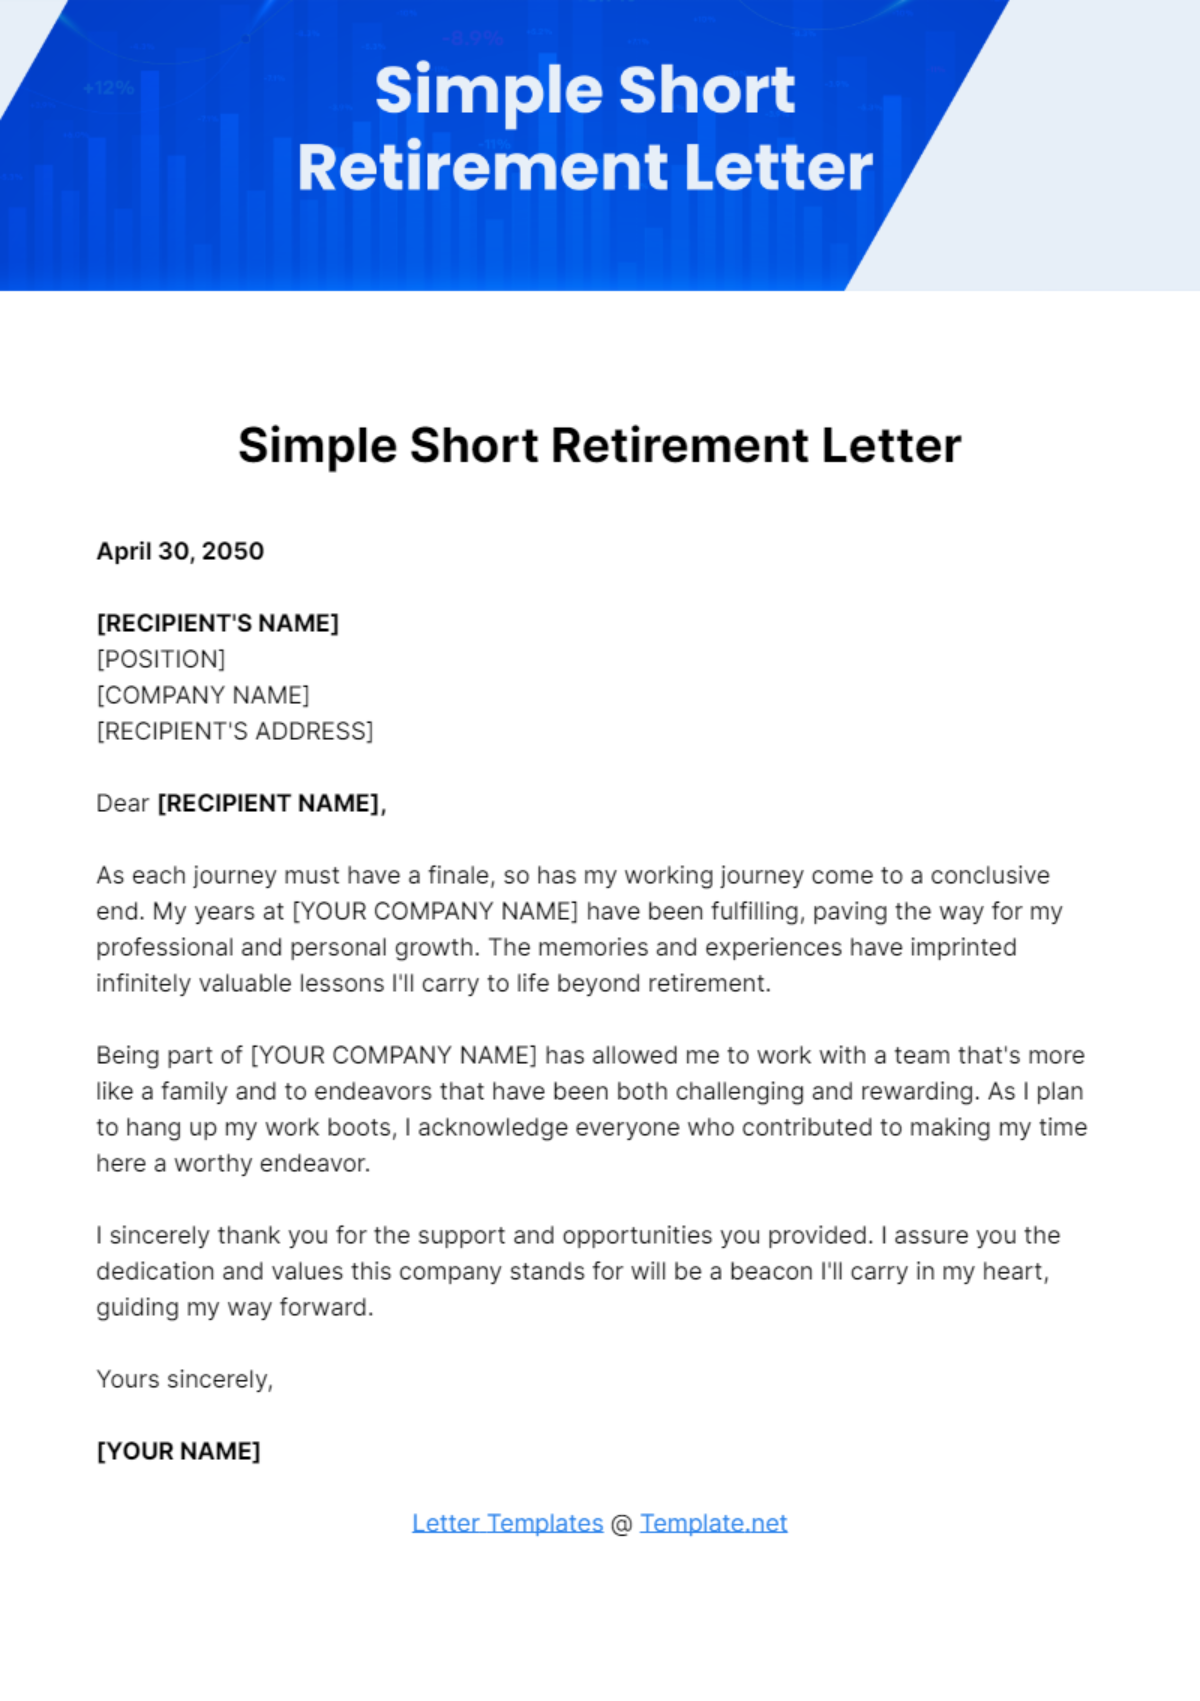 Free Simple Short Retirement Letter Template